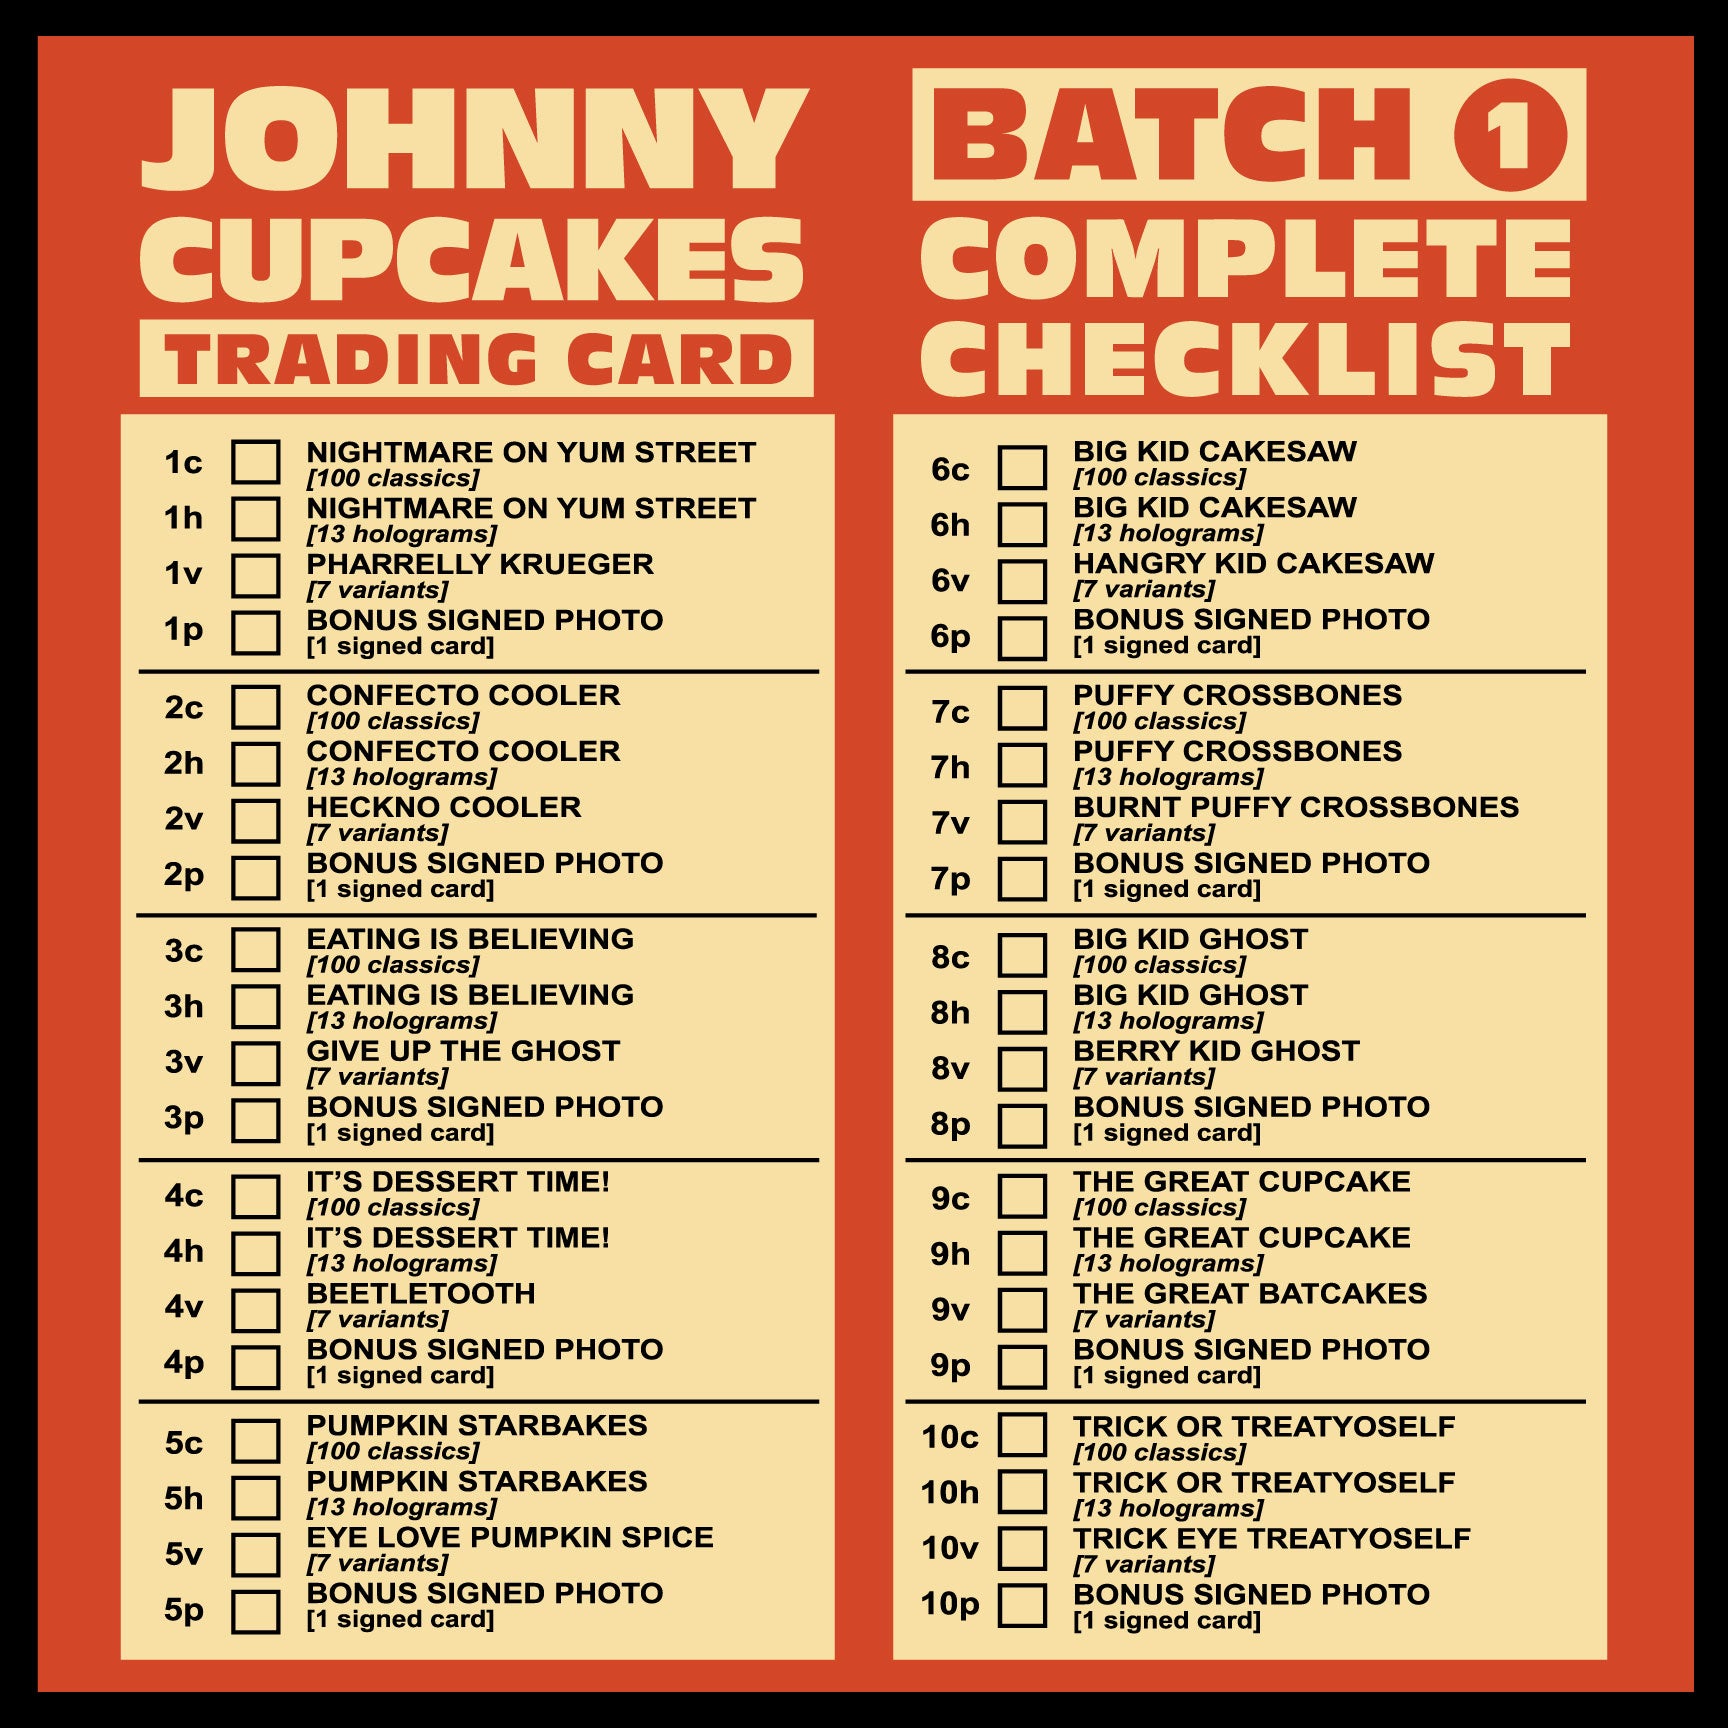 JC Trading Card (Batch 1) - 10 Pack